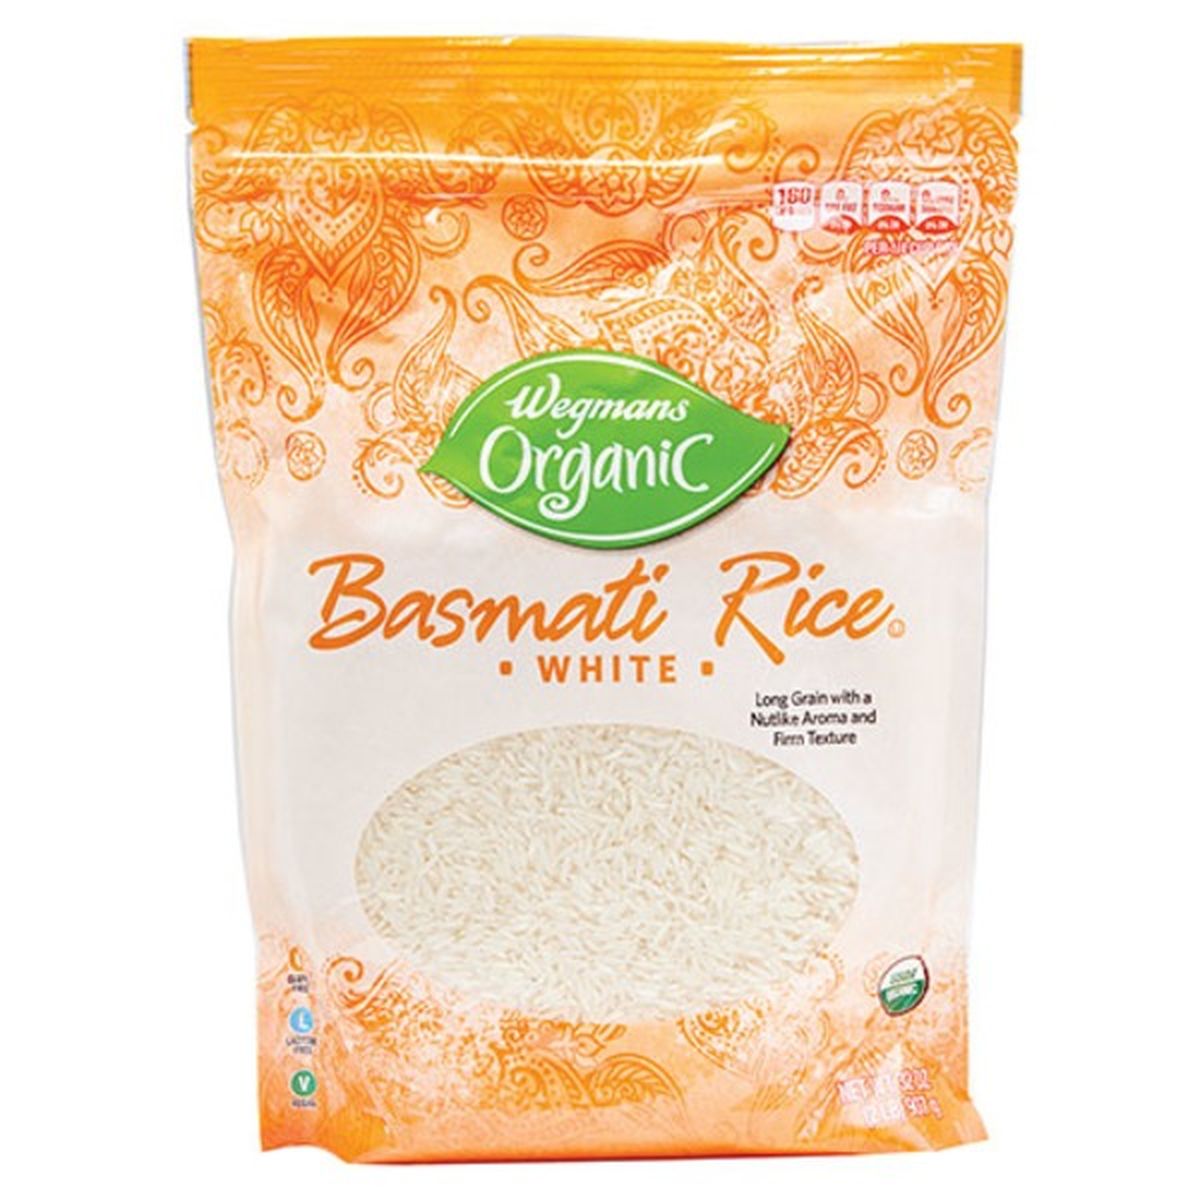 Calories in Wegmans Organic White Basmati Rice